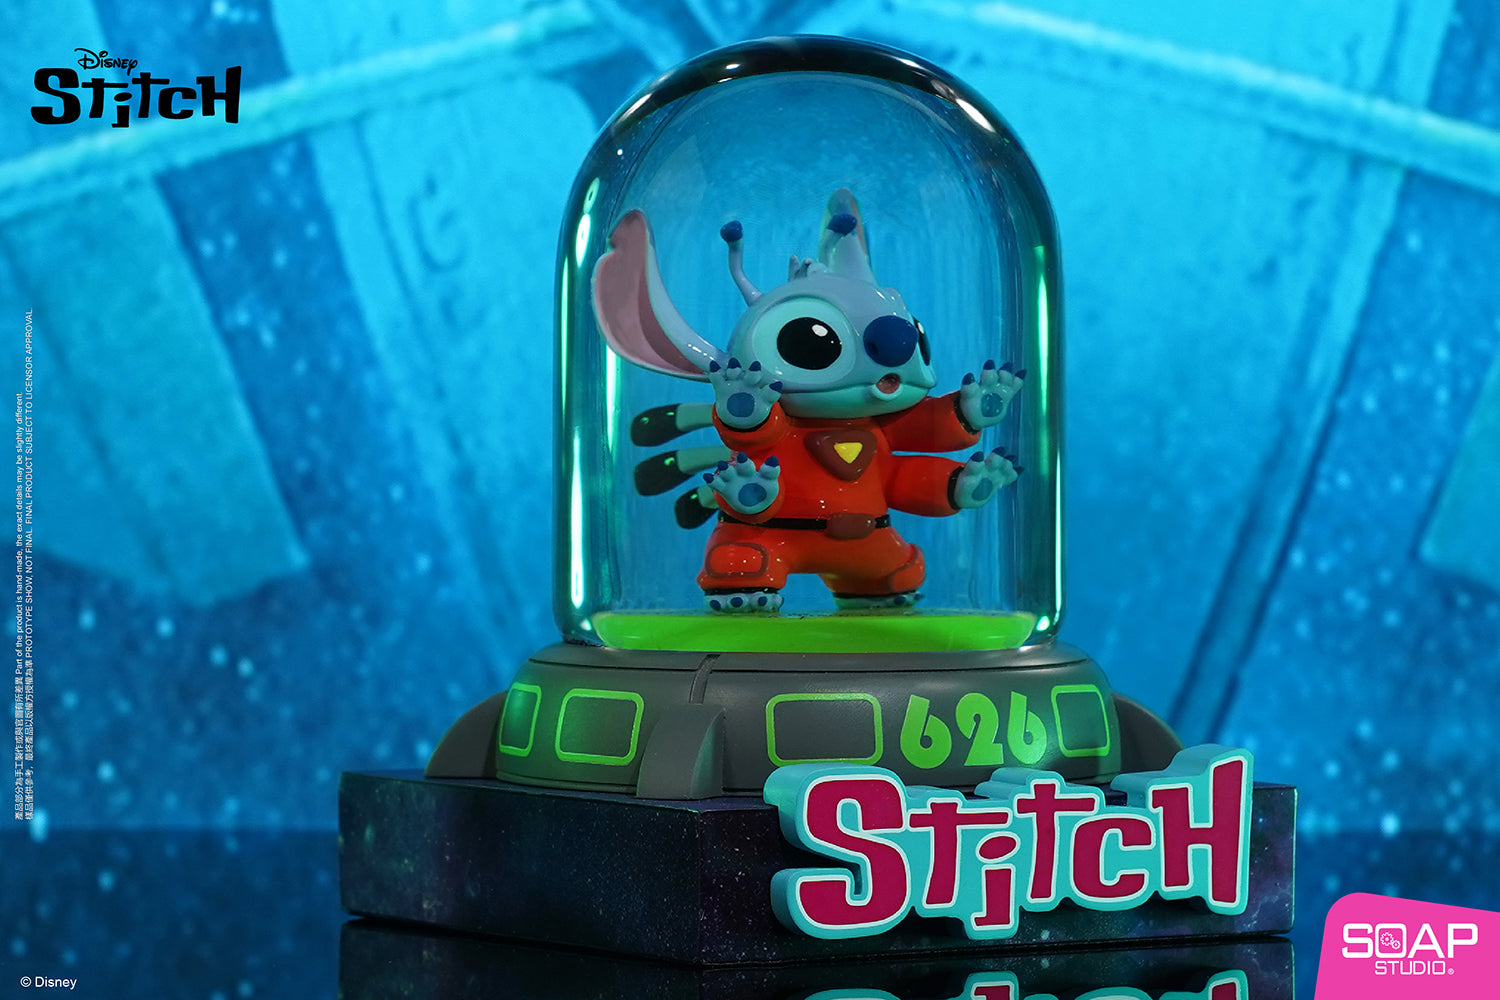 Disney 100 Series: Stitch 626